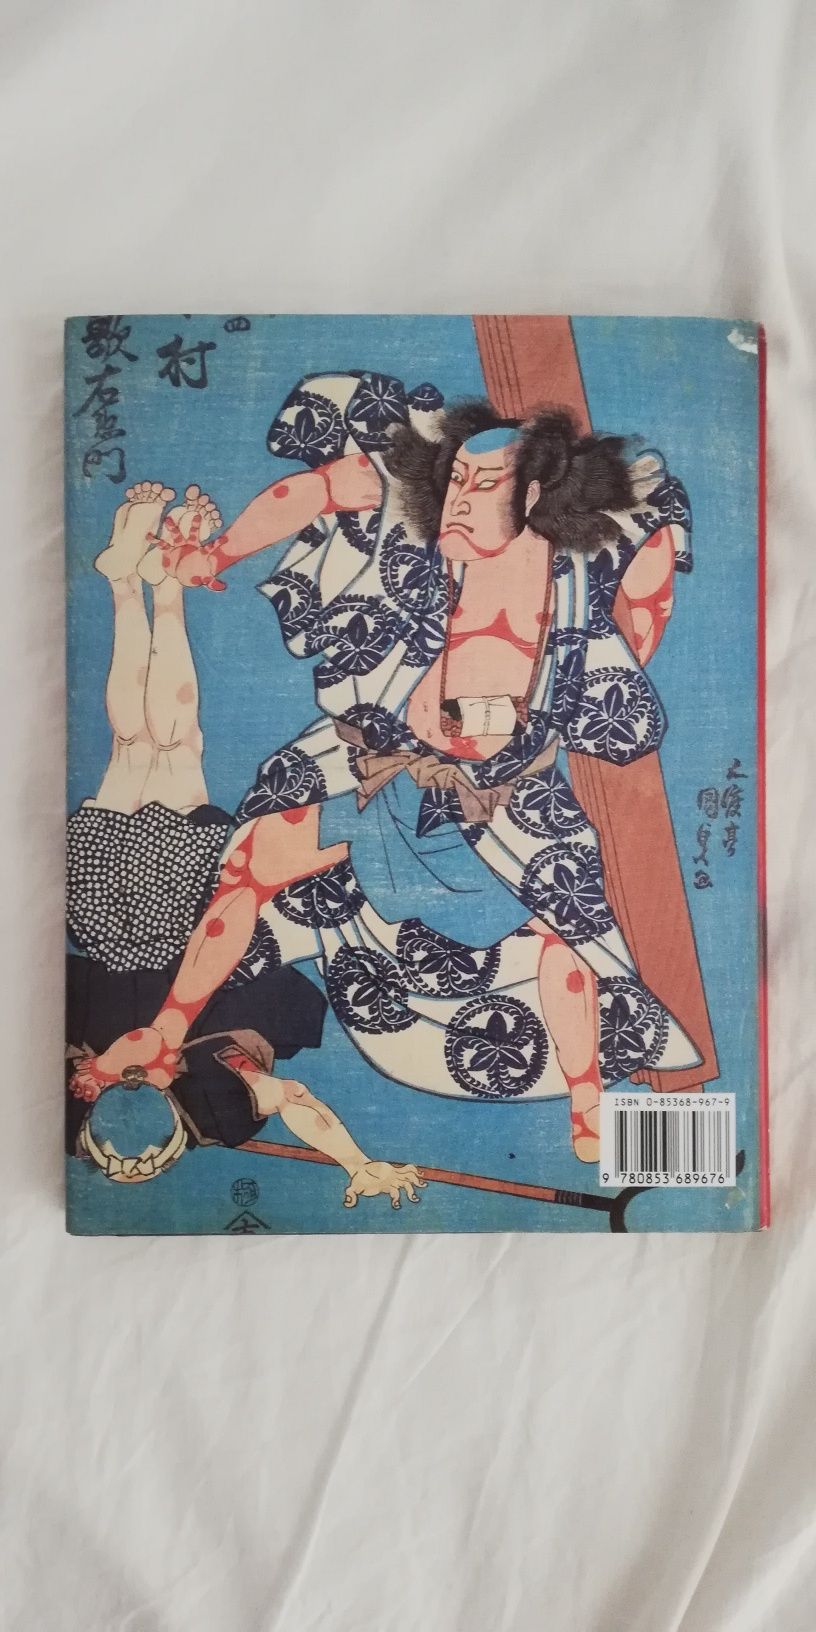 Livro "The Lone Samurai and the Martial Arts", S. Turnbull(portes grát